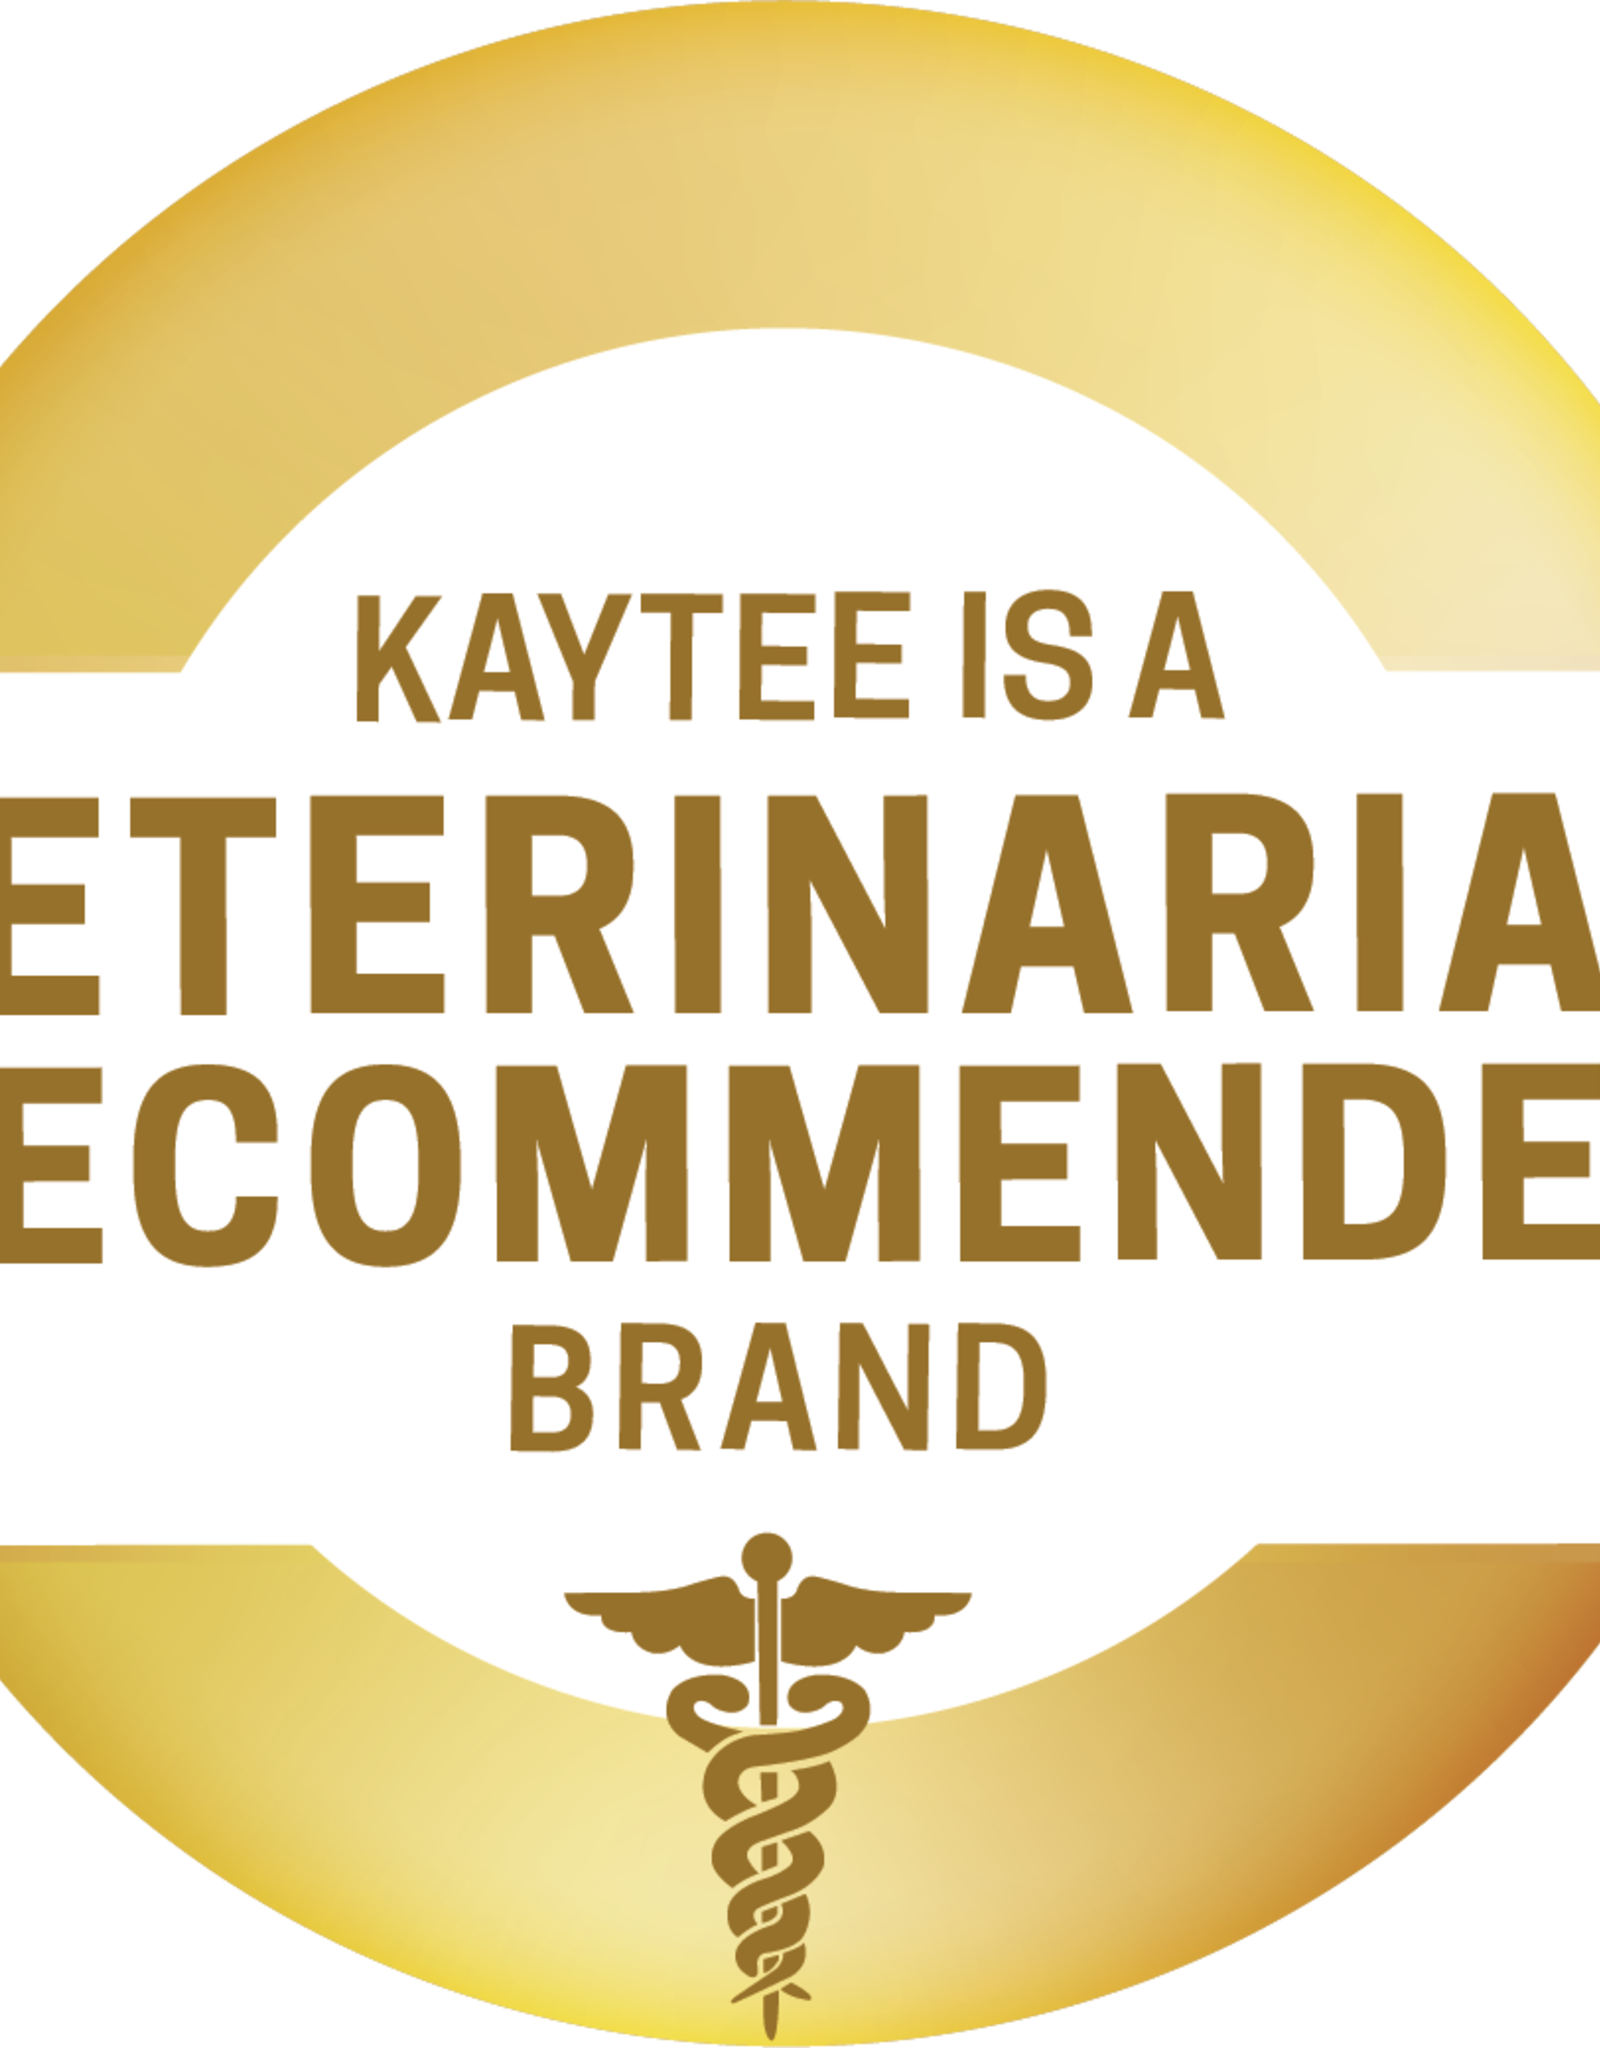 KAYTEE PRODUCTS INC KAYTEE FORTI-DIET PRO HEALTH CONURE & LOVEBIRD 4LBS